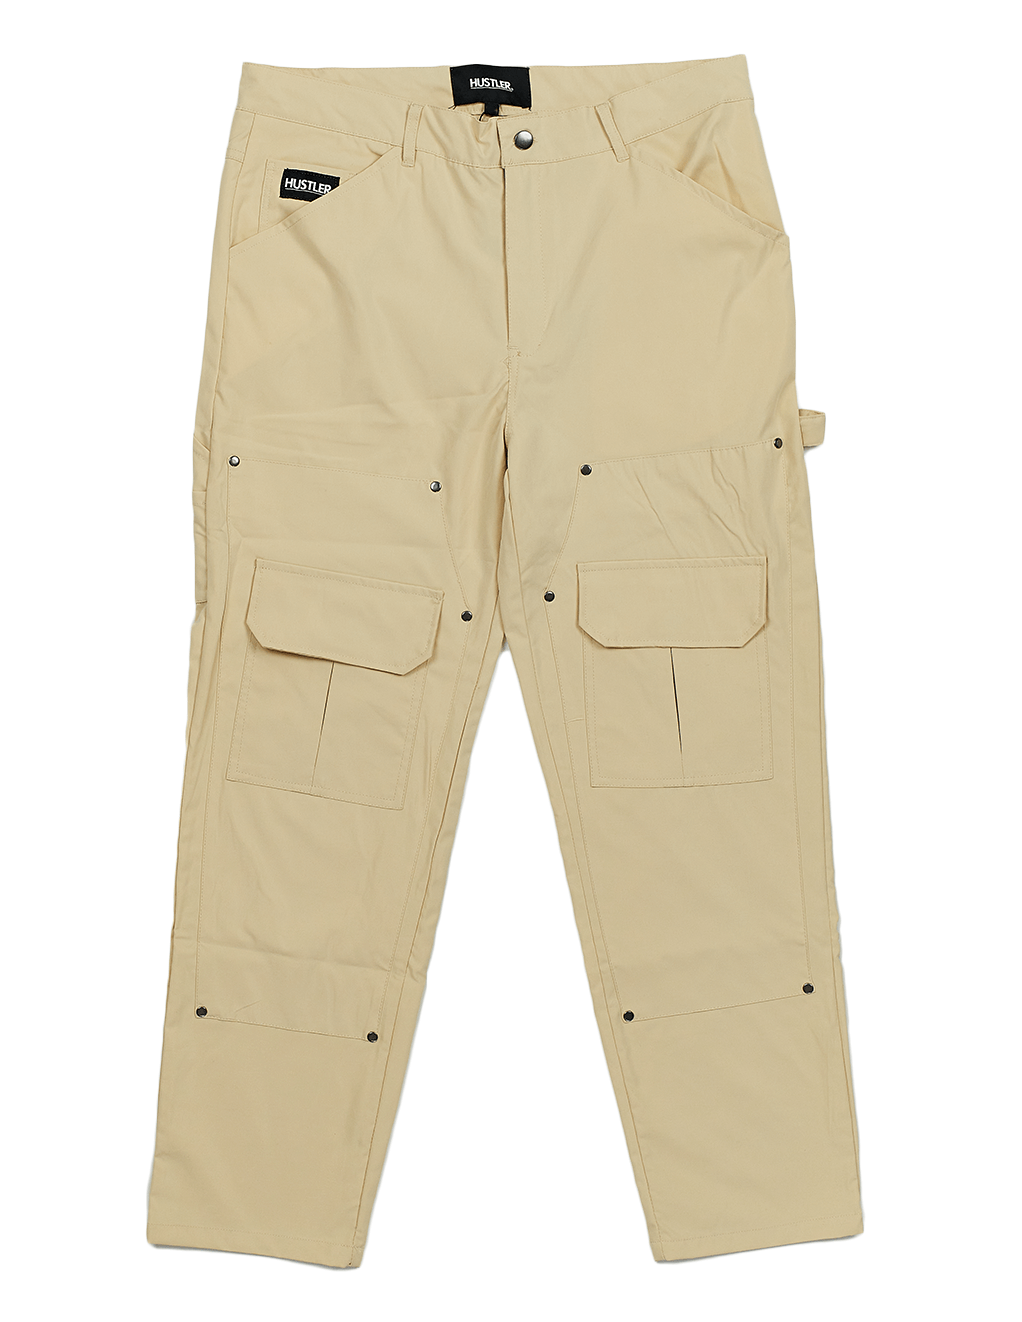 HUSTLER® Carpenter Pants - Khaki - Front